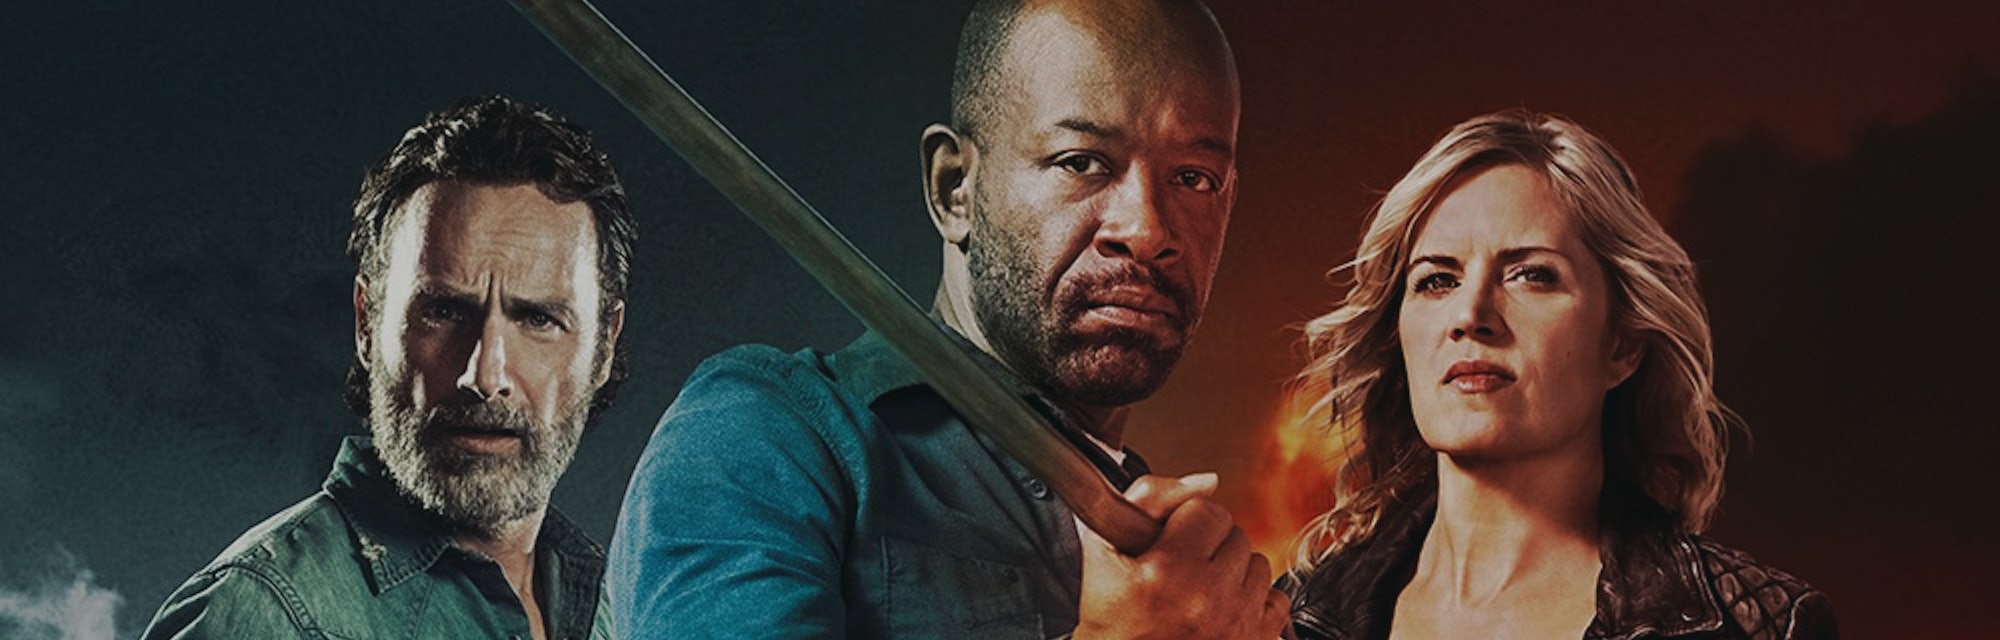 Walking Dead Season 8 Trailer Gets Explosive Comic-Con Bow